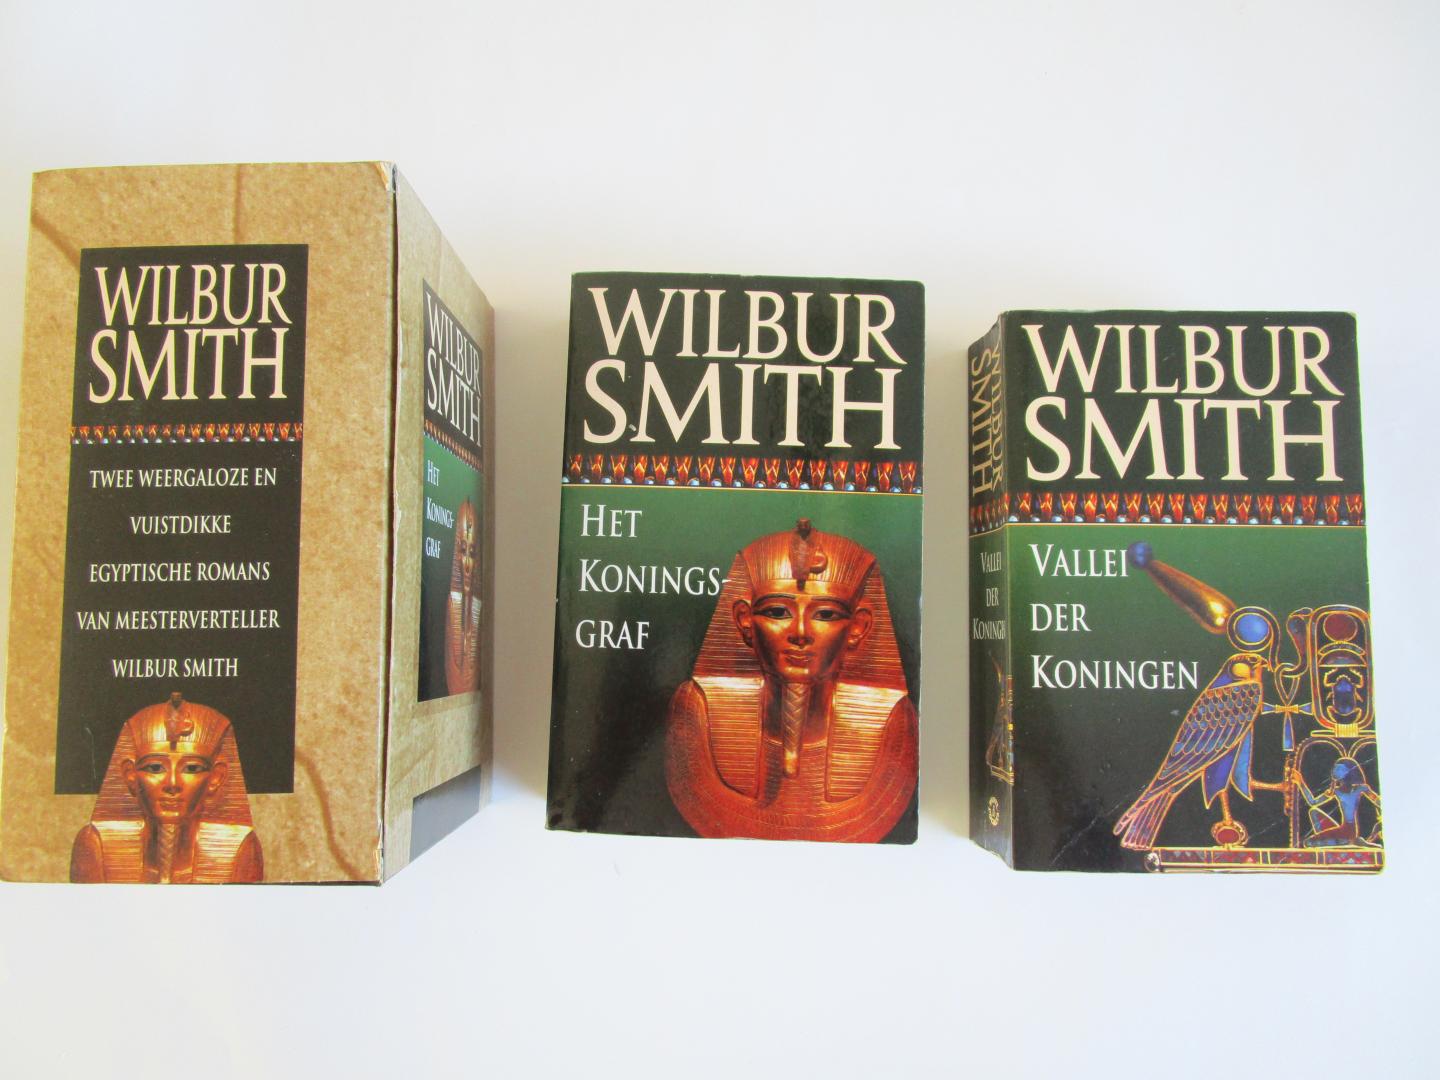 Smith, Wilbur - Het Koningsgraf; Vallei der Koningen (2 boeken in cassette)